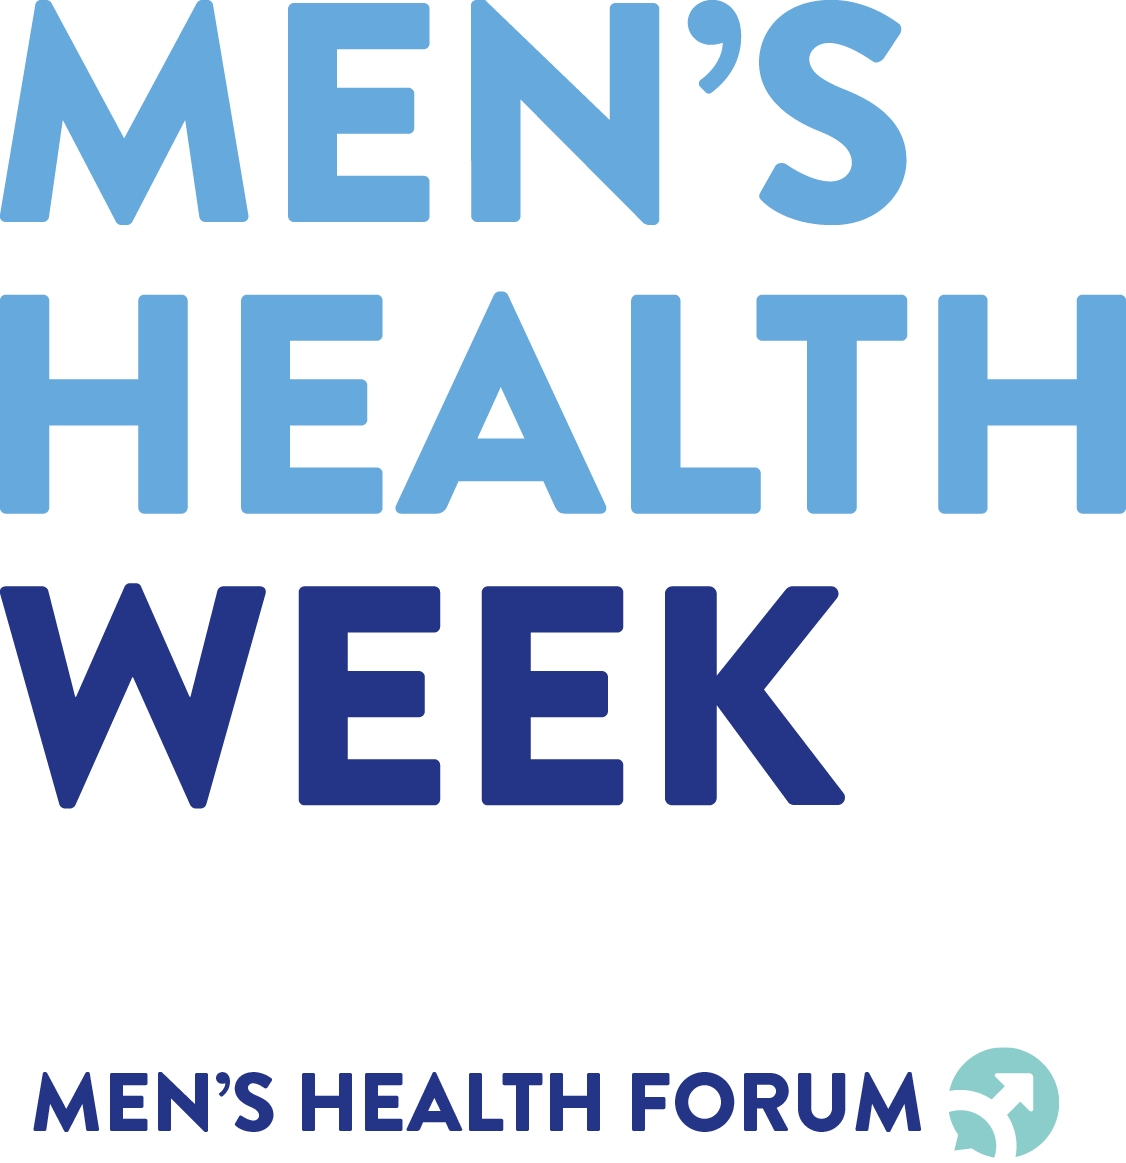 Men's Health Logo - Men's Health Week 2016: logos/cartoons | Men's Health Forum